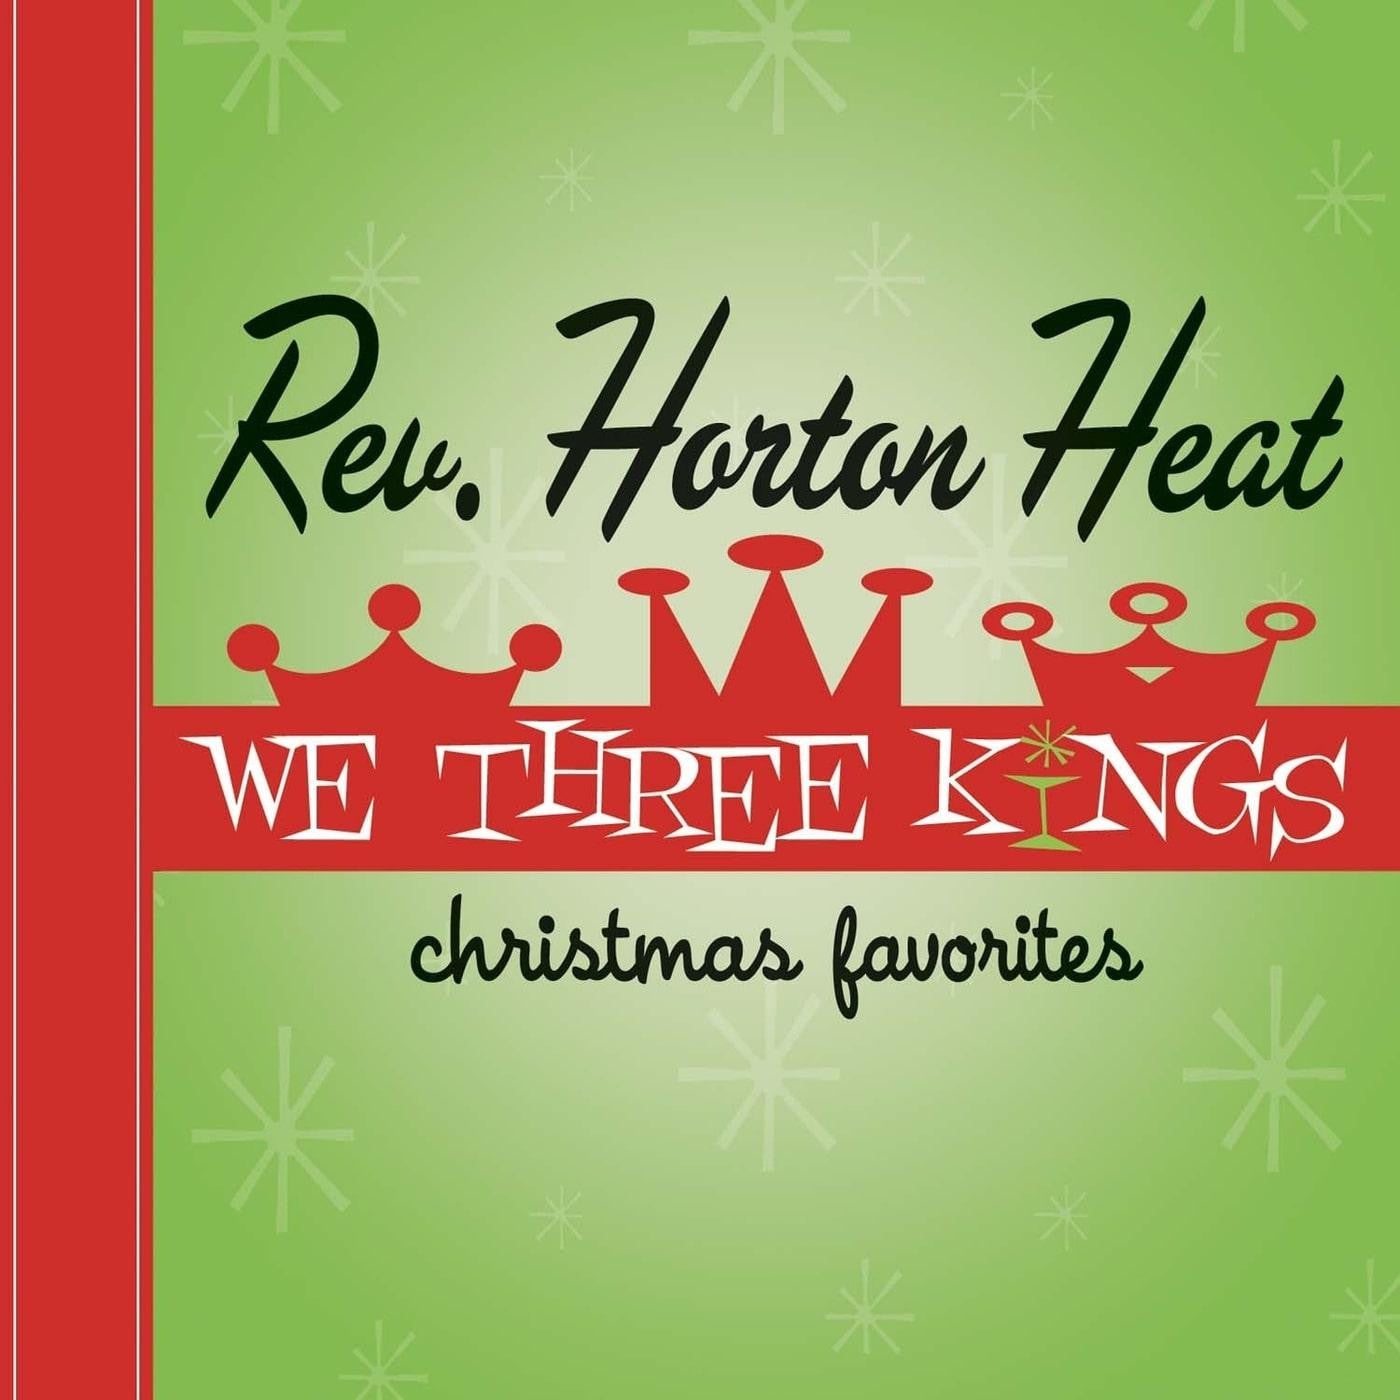 Rev. Horton Heat – We Three Kings (2005) - New LP Record Store Day Black Friday 2021 Yep Roc Red Vinyl - Rockabilly